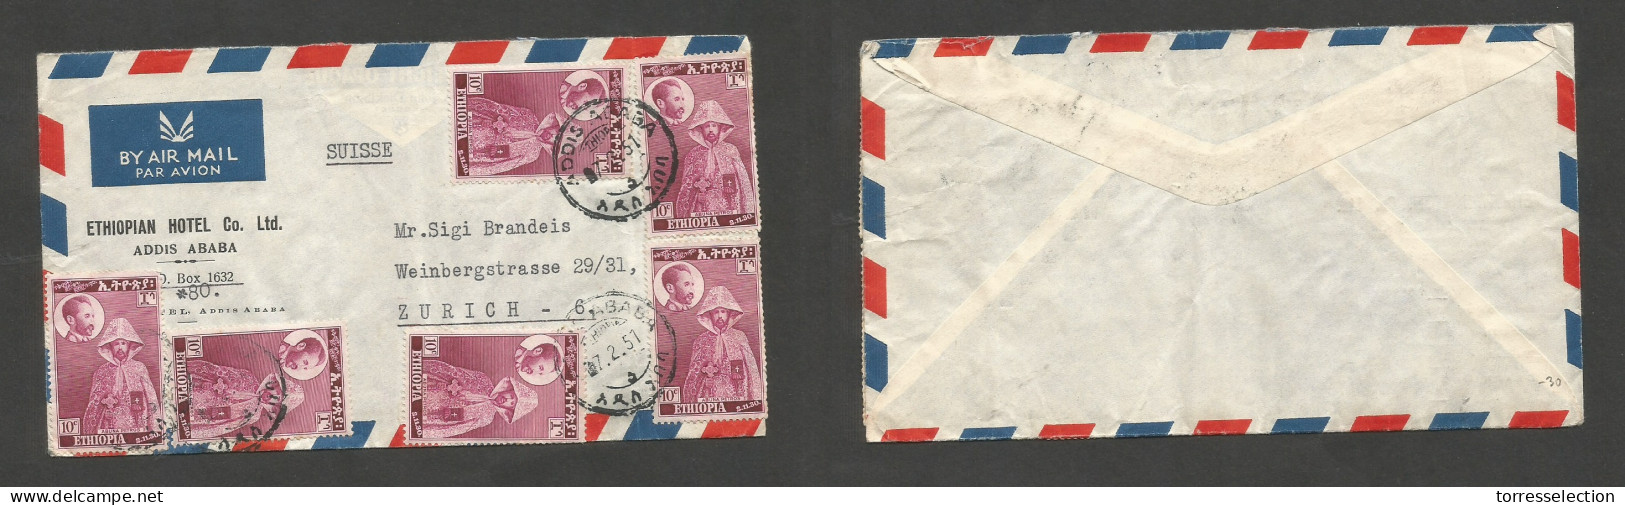 ETHIOPIA. 1951 (7 Febr) Addis Ababa - Zurich, Switzerland. Air Multifkd Env, Tied Cds, At 60c Rate. V. Appealing. - Äthiopien